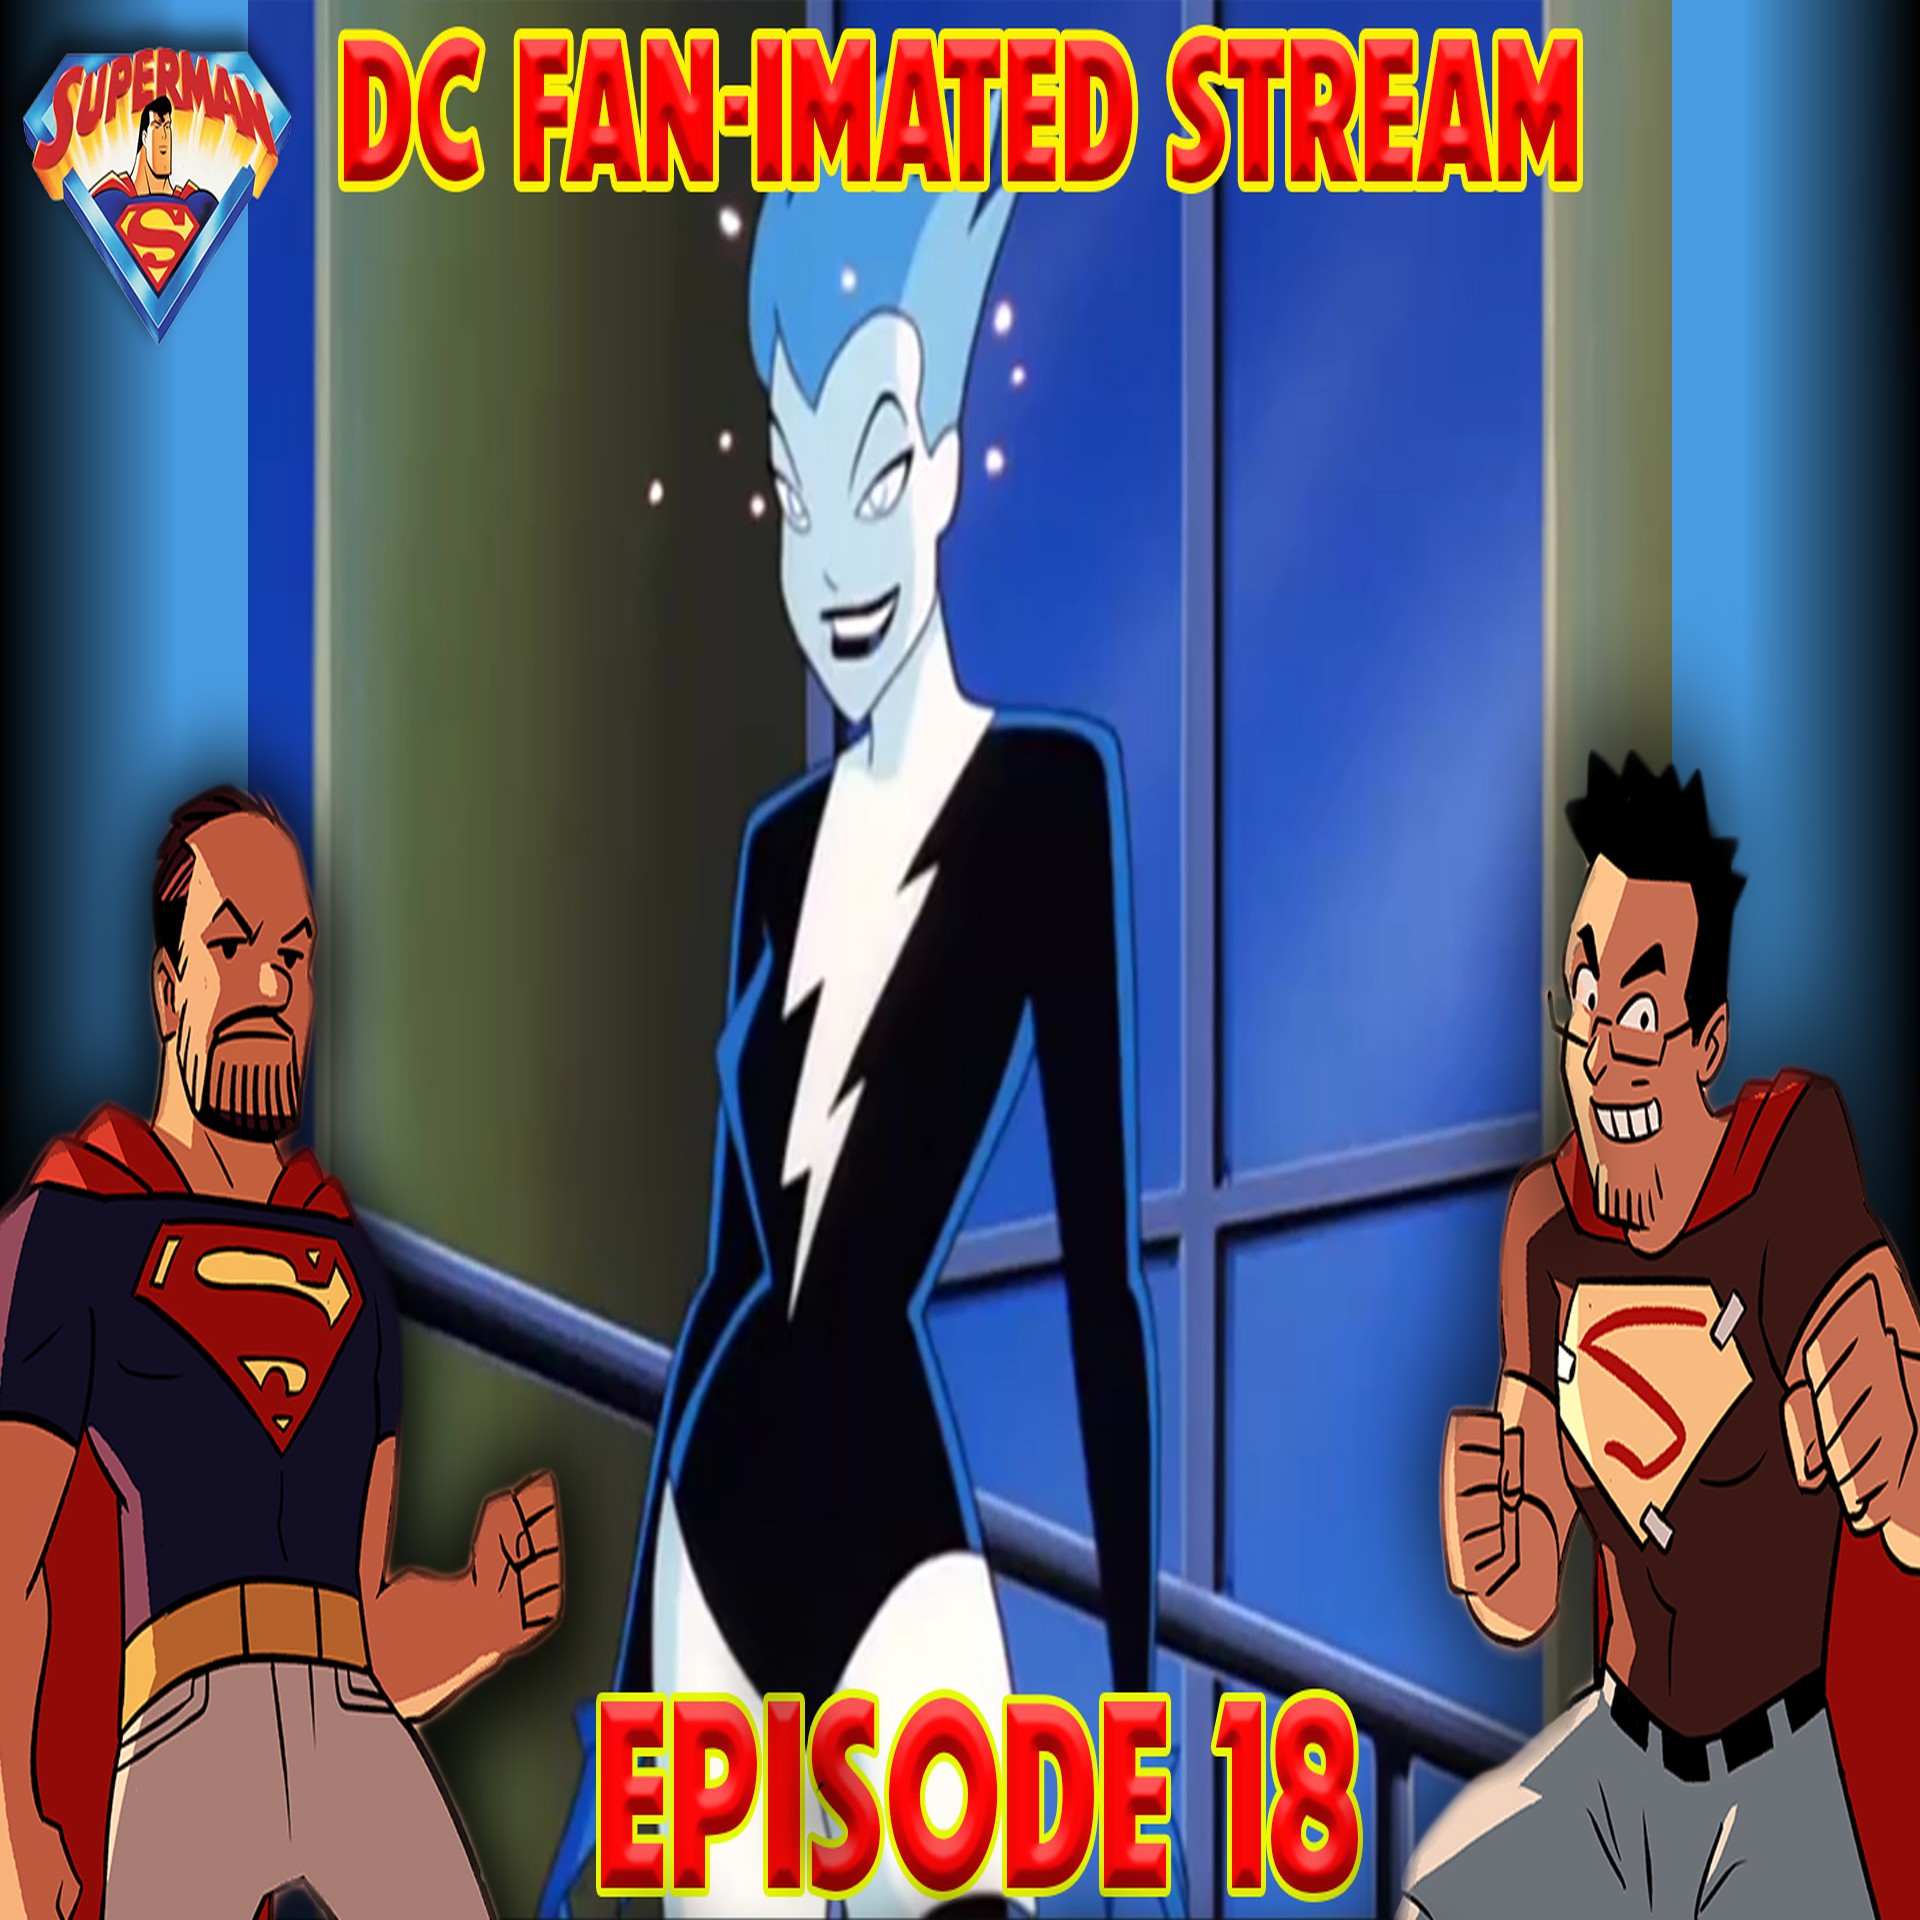 DC Fan-imated Stream